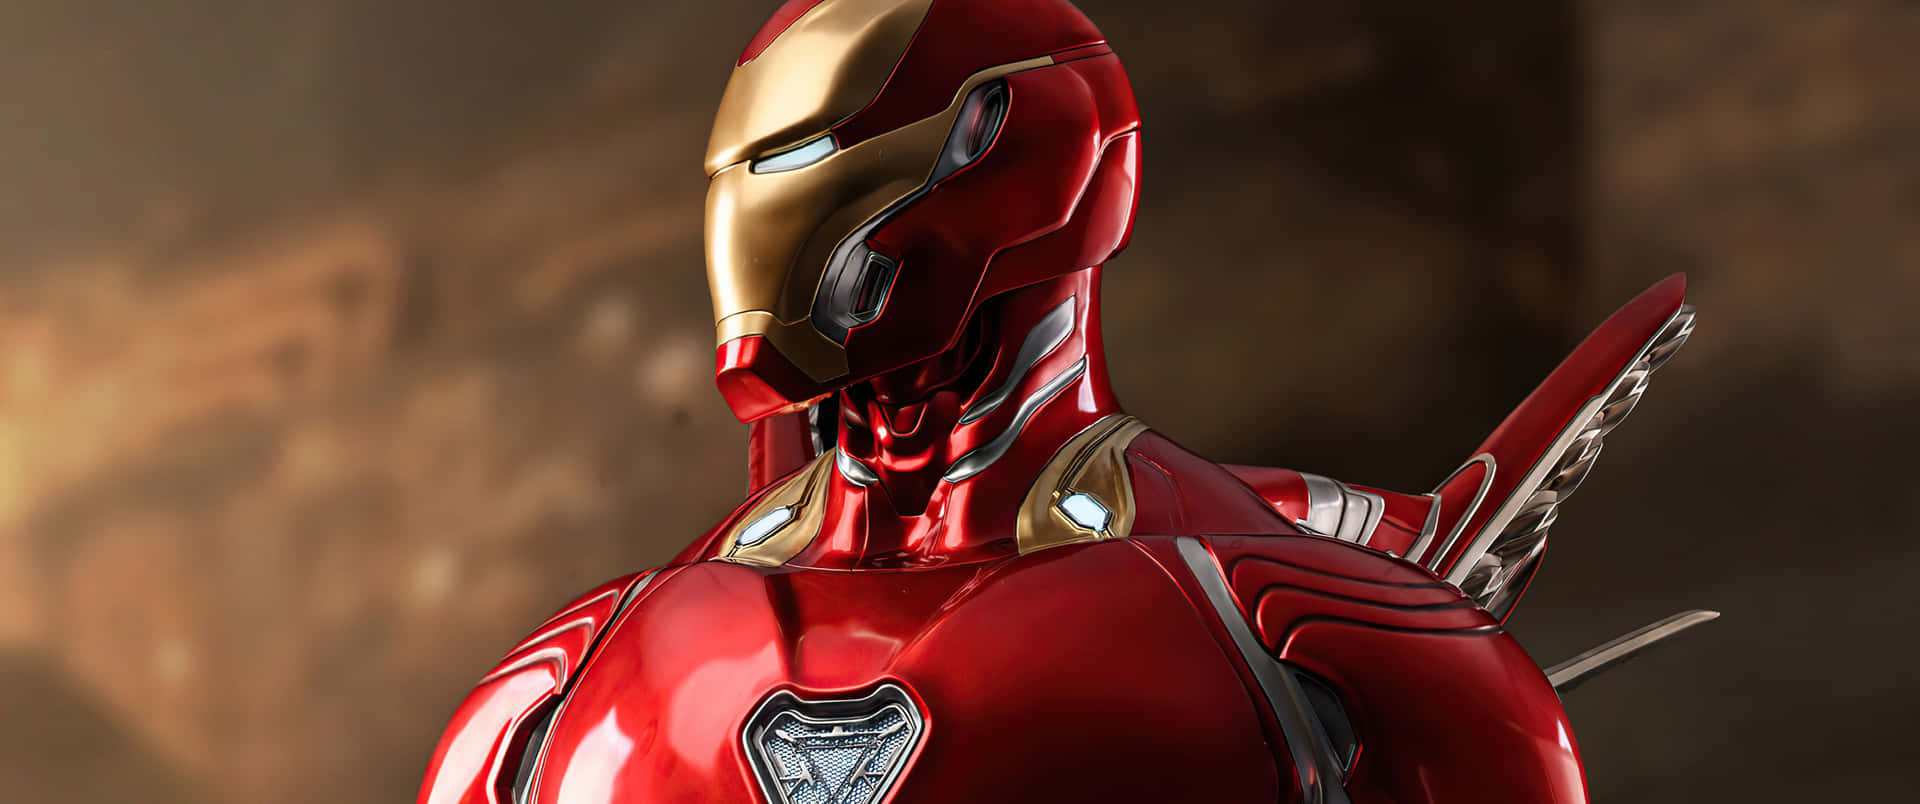 Iron Man Armored Hero Super Ultra Wide Wallpaper